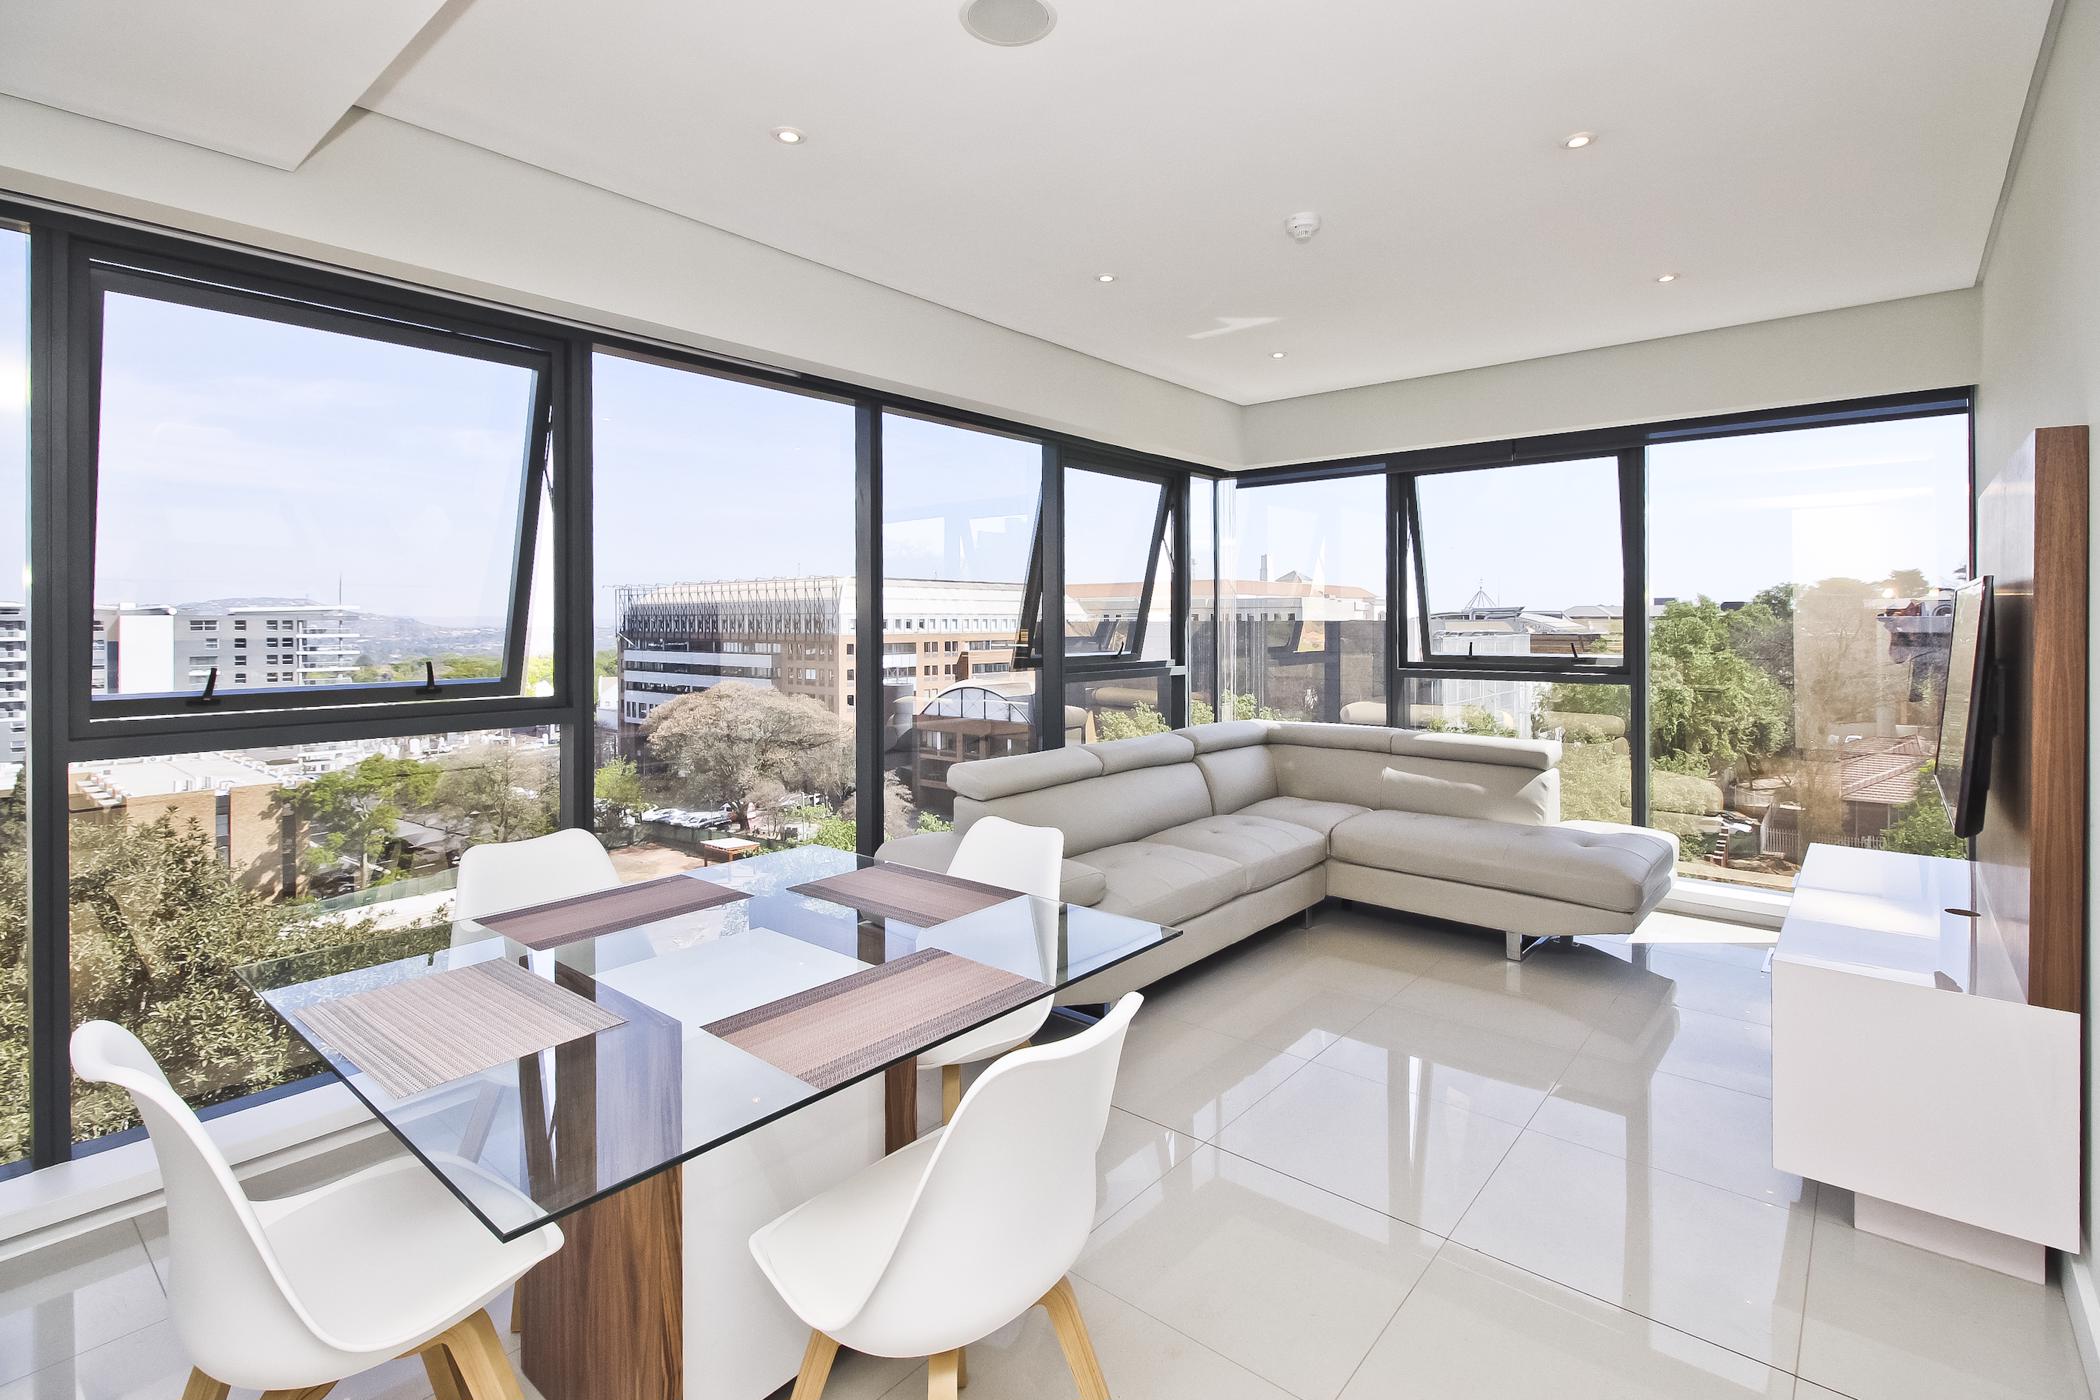 2 bedroom apartment to rent in Rosebank (Johannesburg)